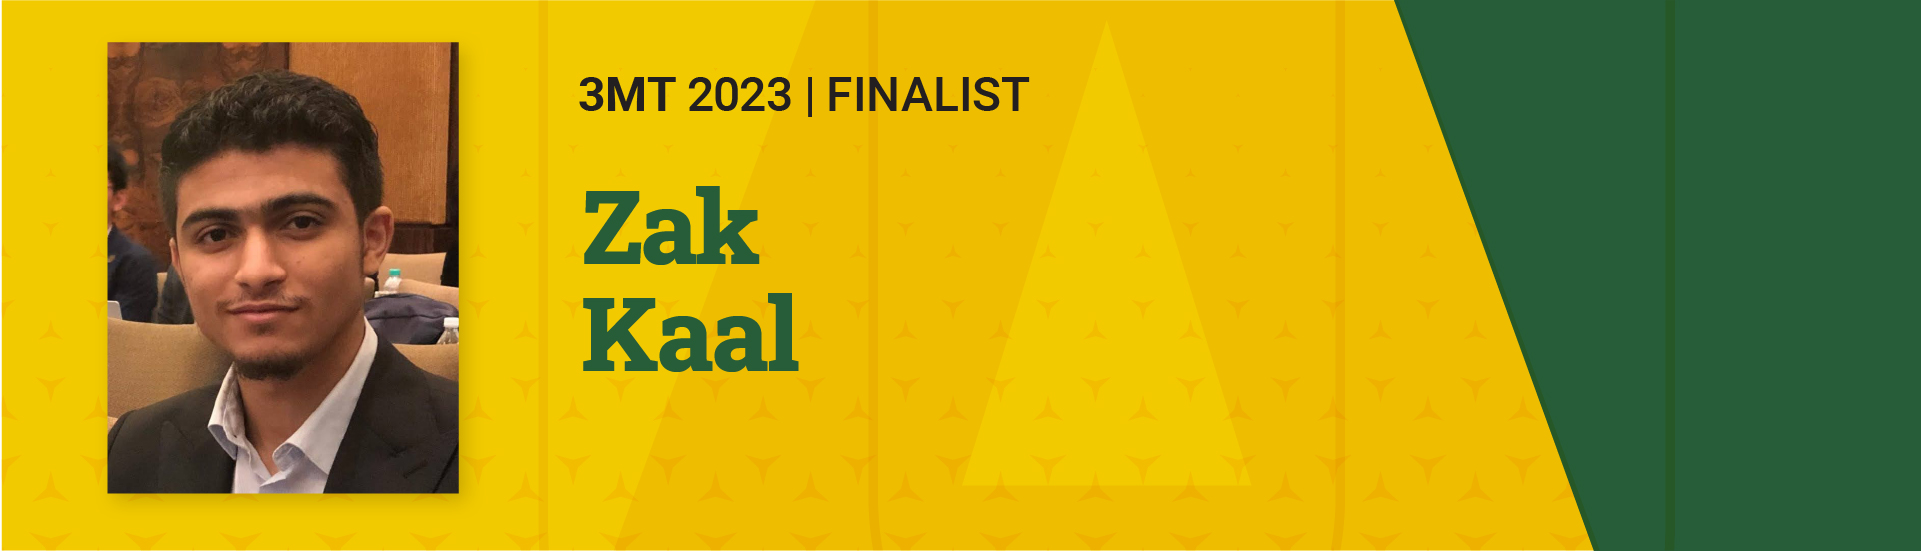 3MT 2023 Finalist  Zak Kaal 